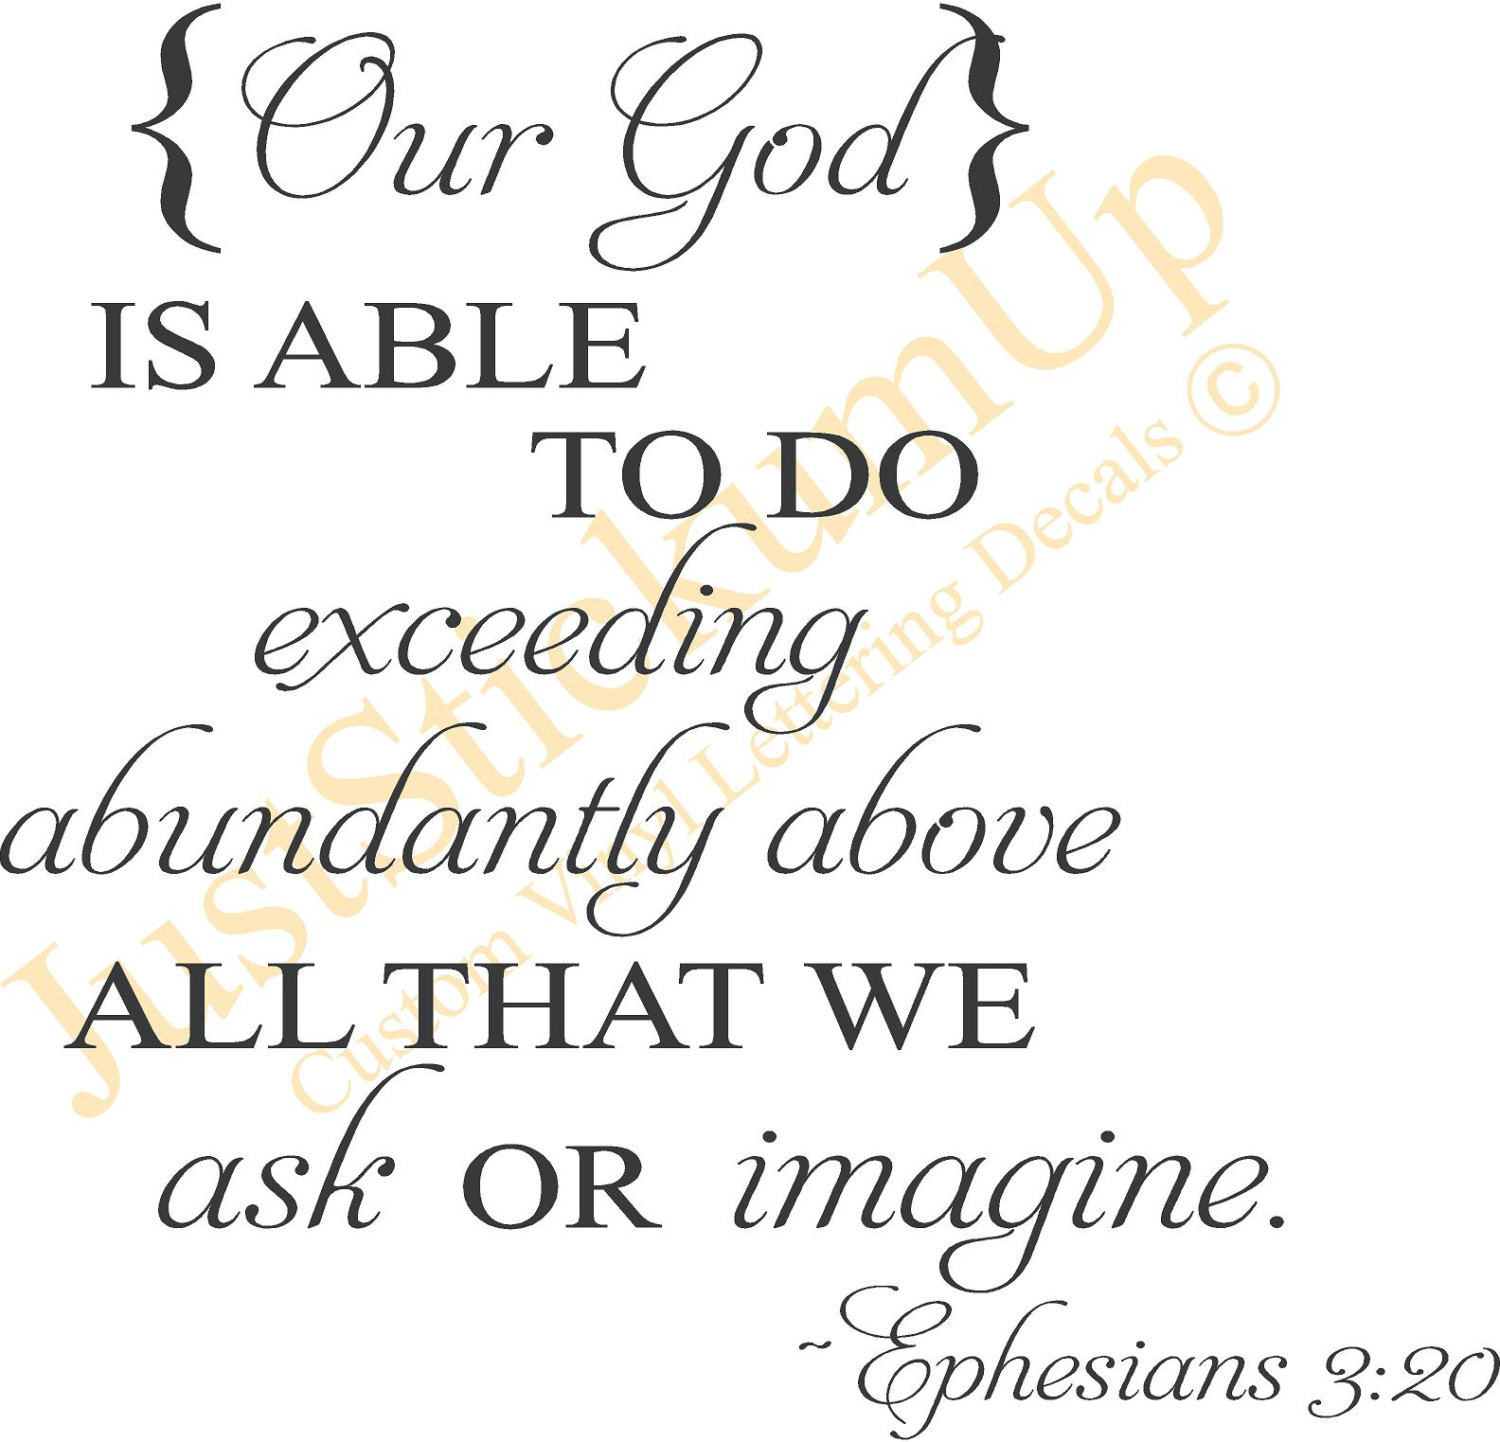 Ephesians Scripture Our